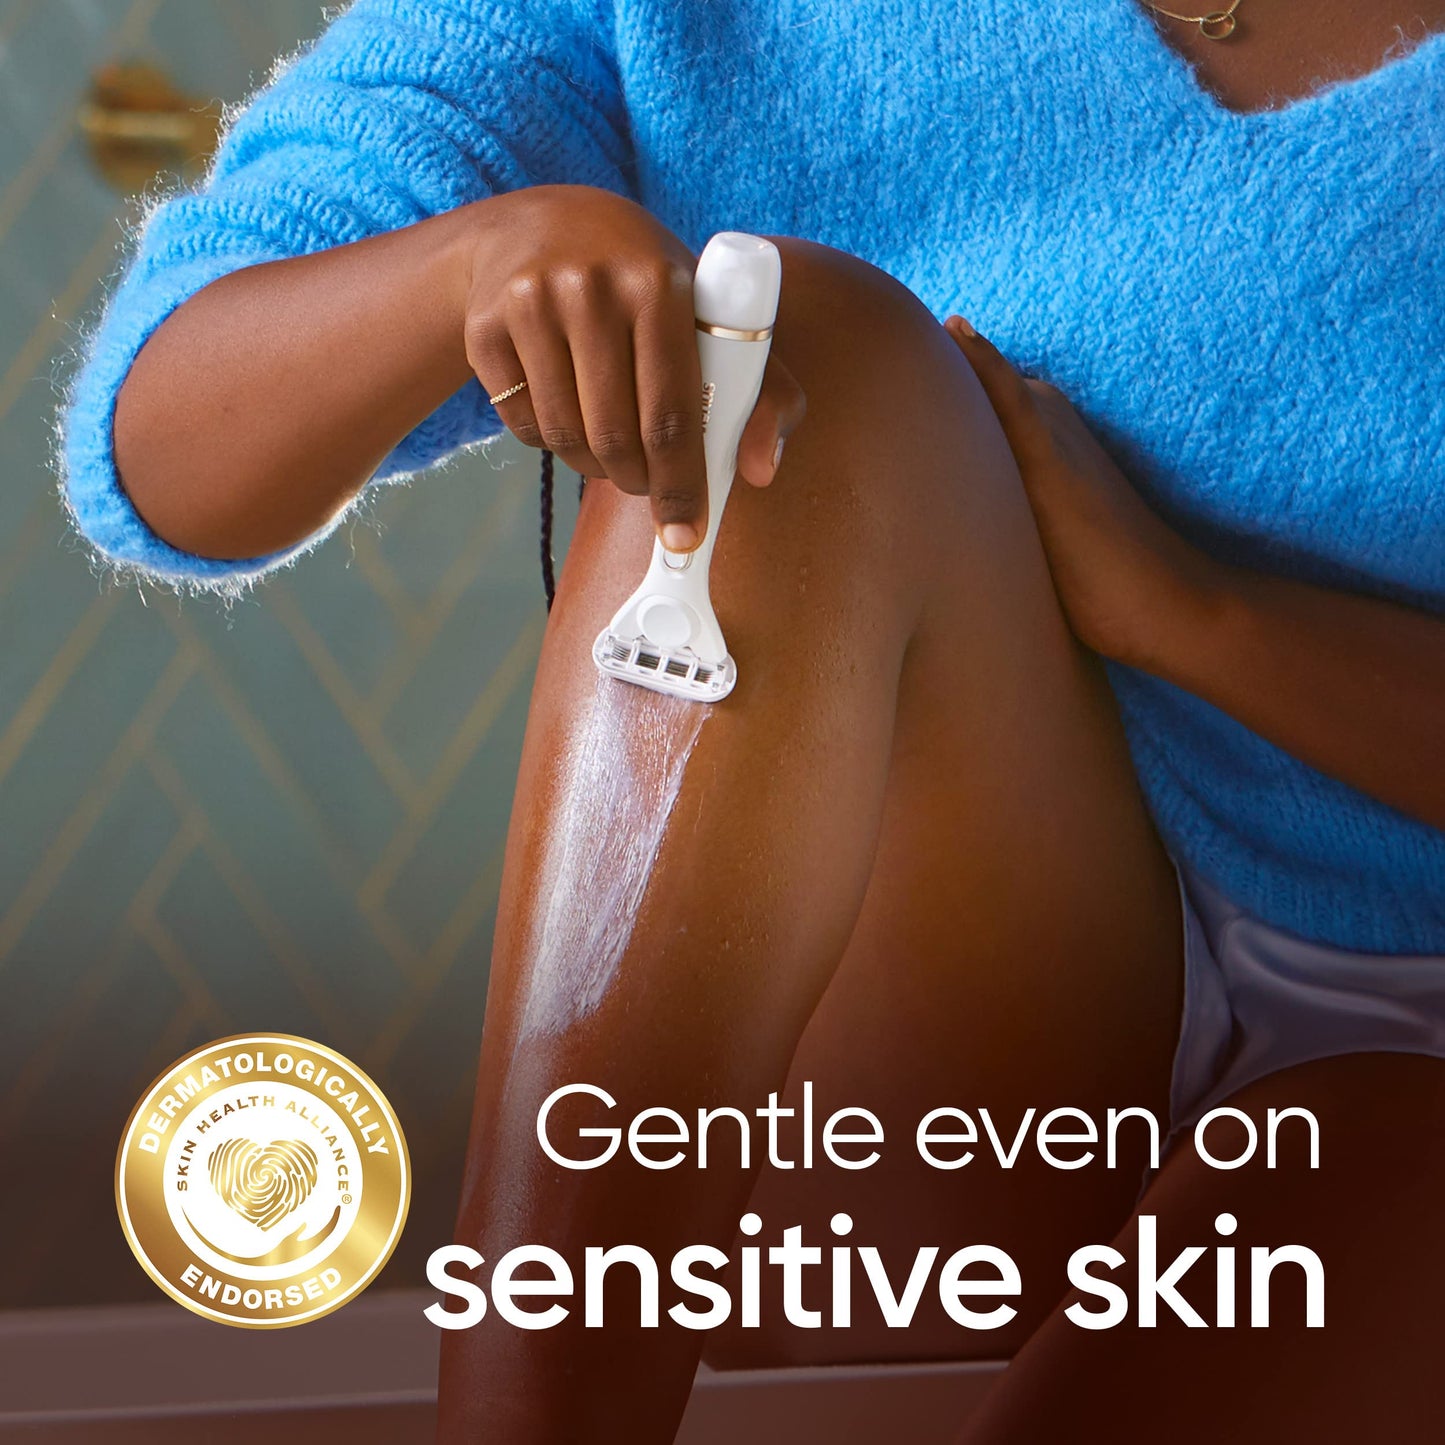 Gillette Venus Radiant Skin Moisturizing Women’s Razor For Dry And Sensitive Skin With Olay Moisturizer Dispenser, 1 Serum, And 1 Razor Blade Refill